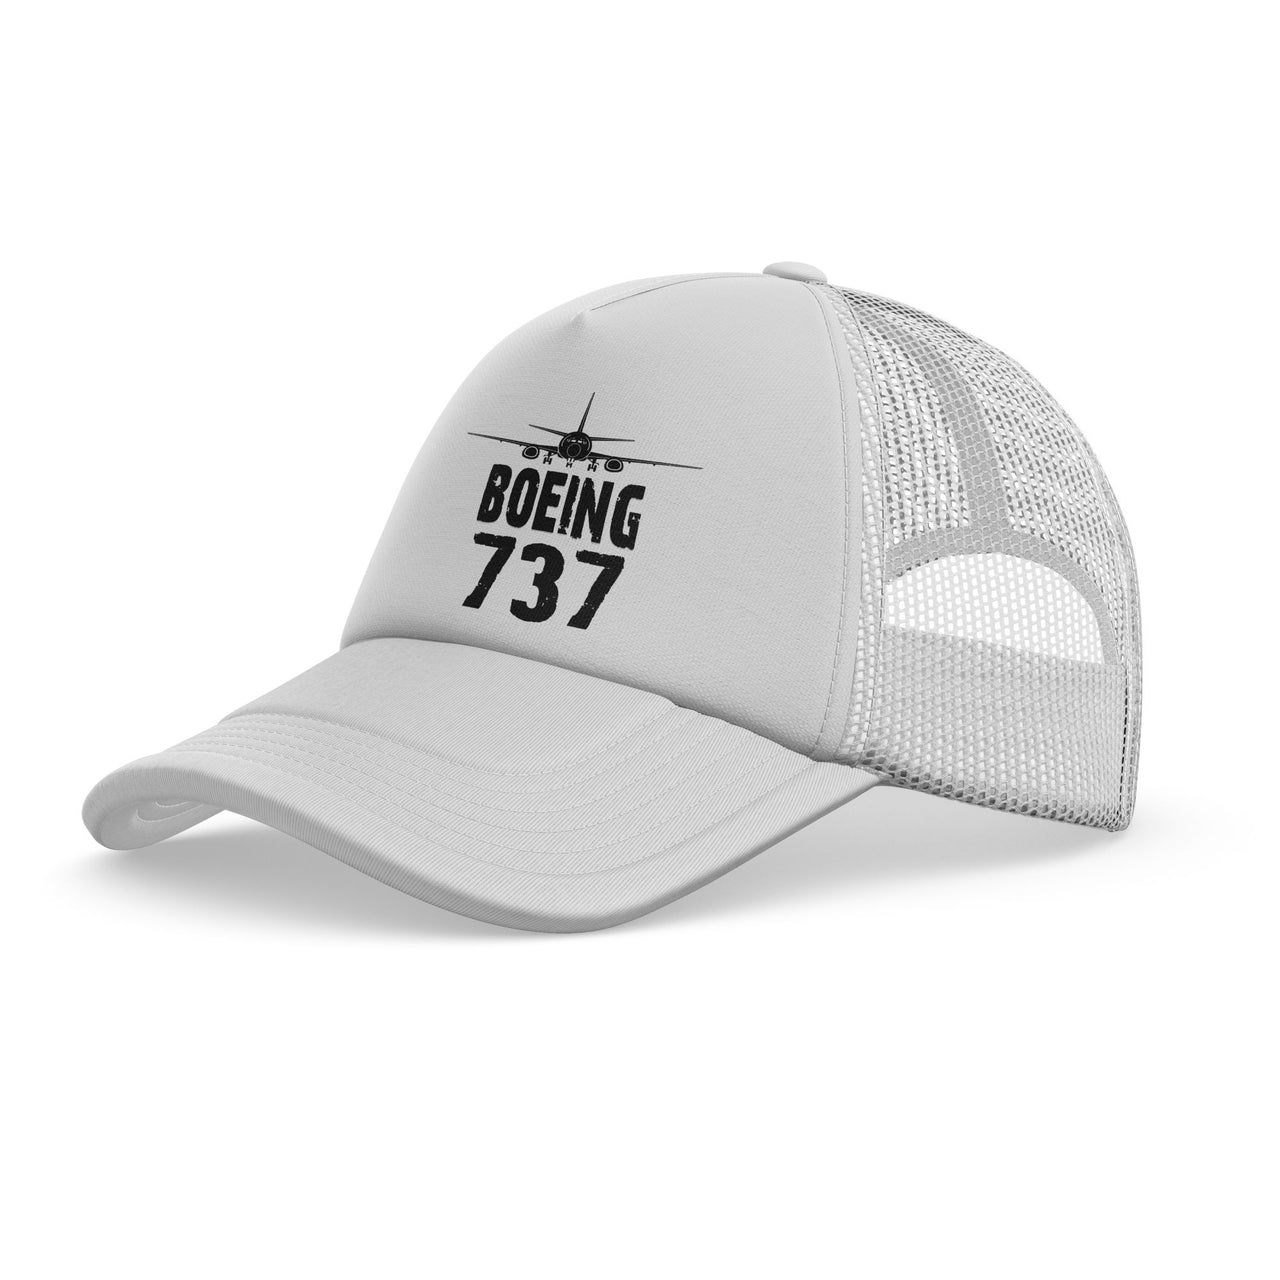 Boeing 737 & Plane Designed Trucker Caps & Hats